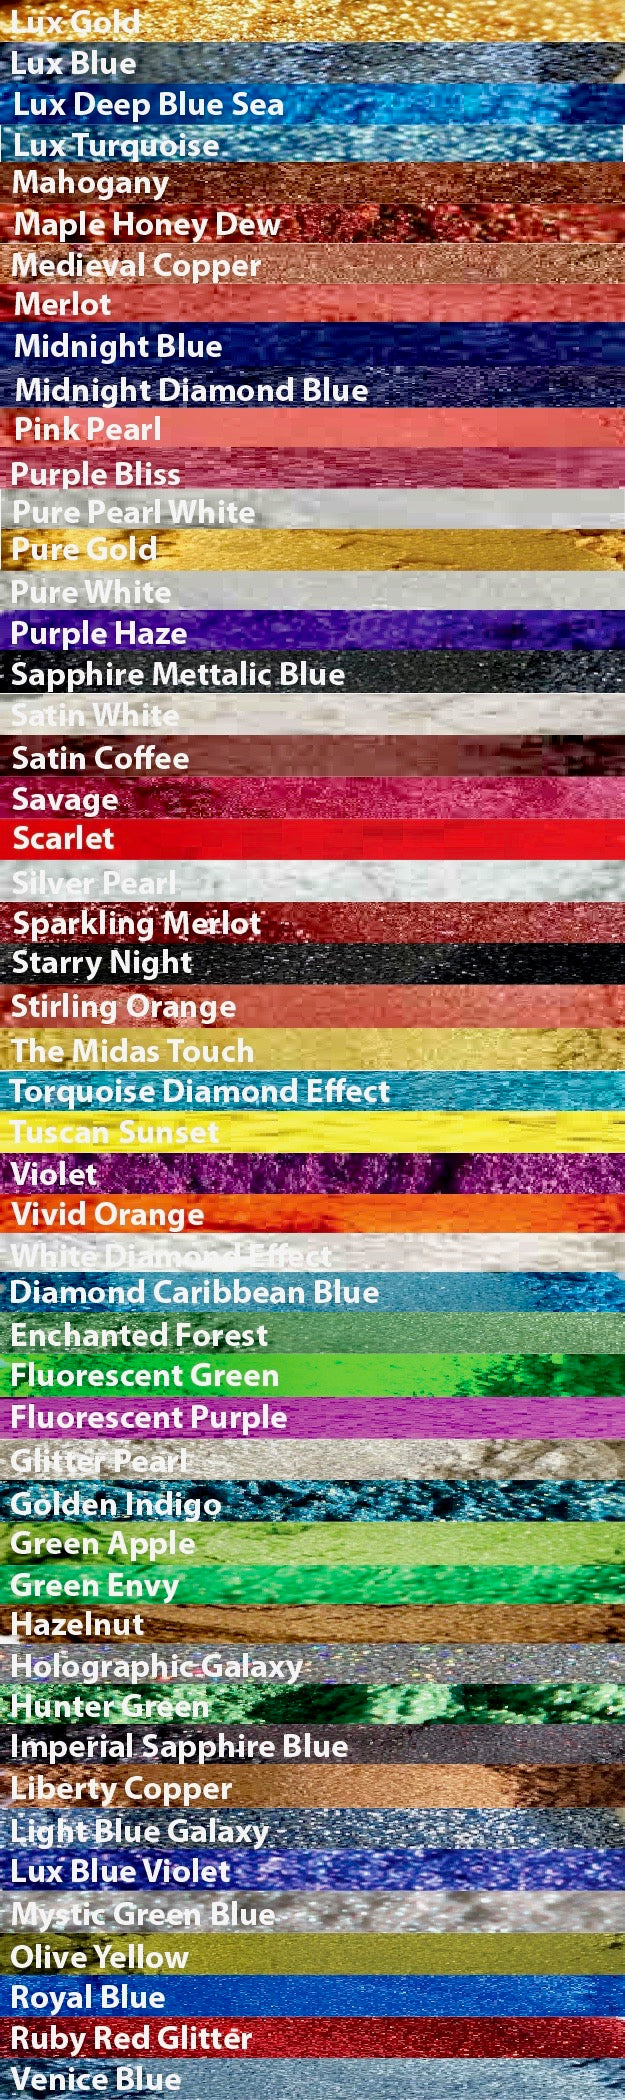 42g "SATIN COFFEE" Make-A-Wish Black Diamond Pigments